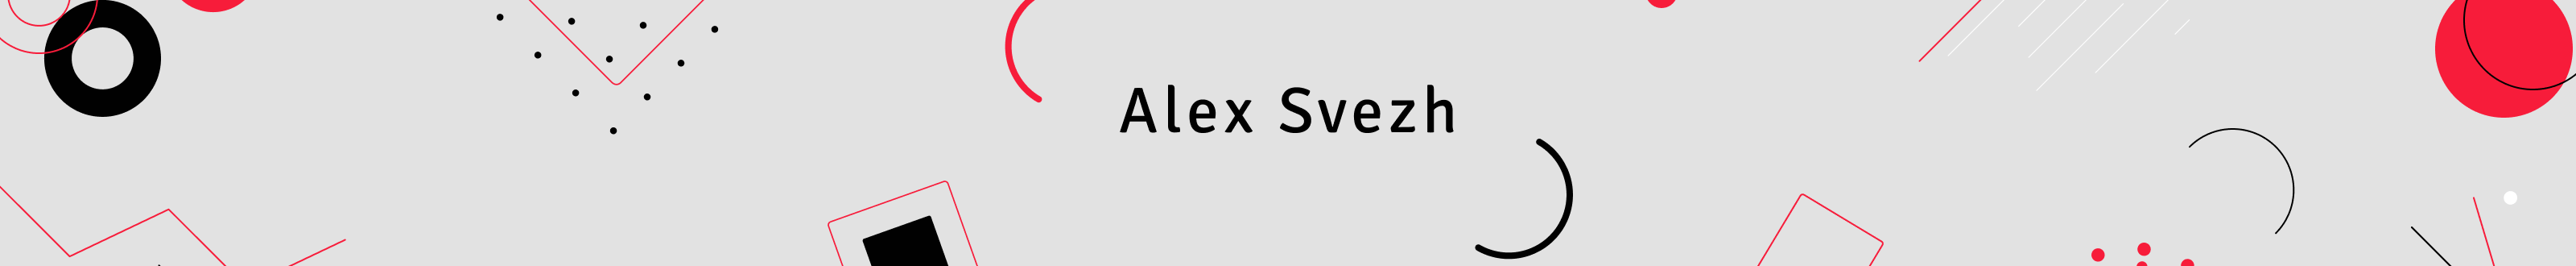 Alex Svezh's profile banner